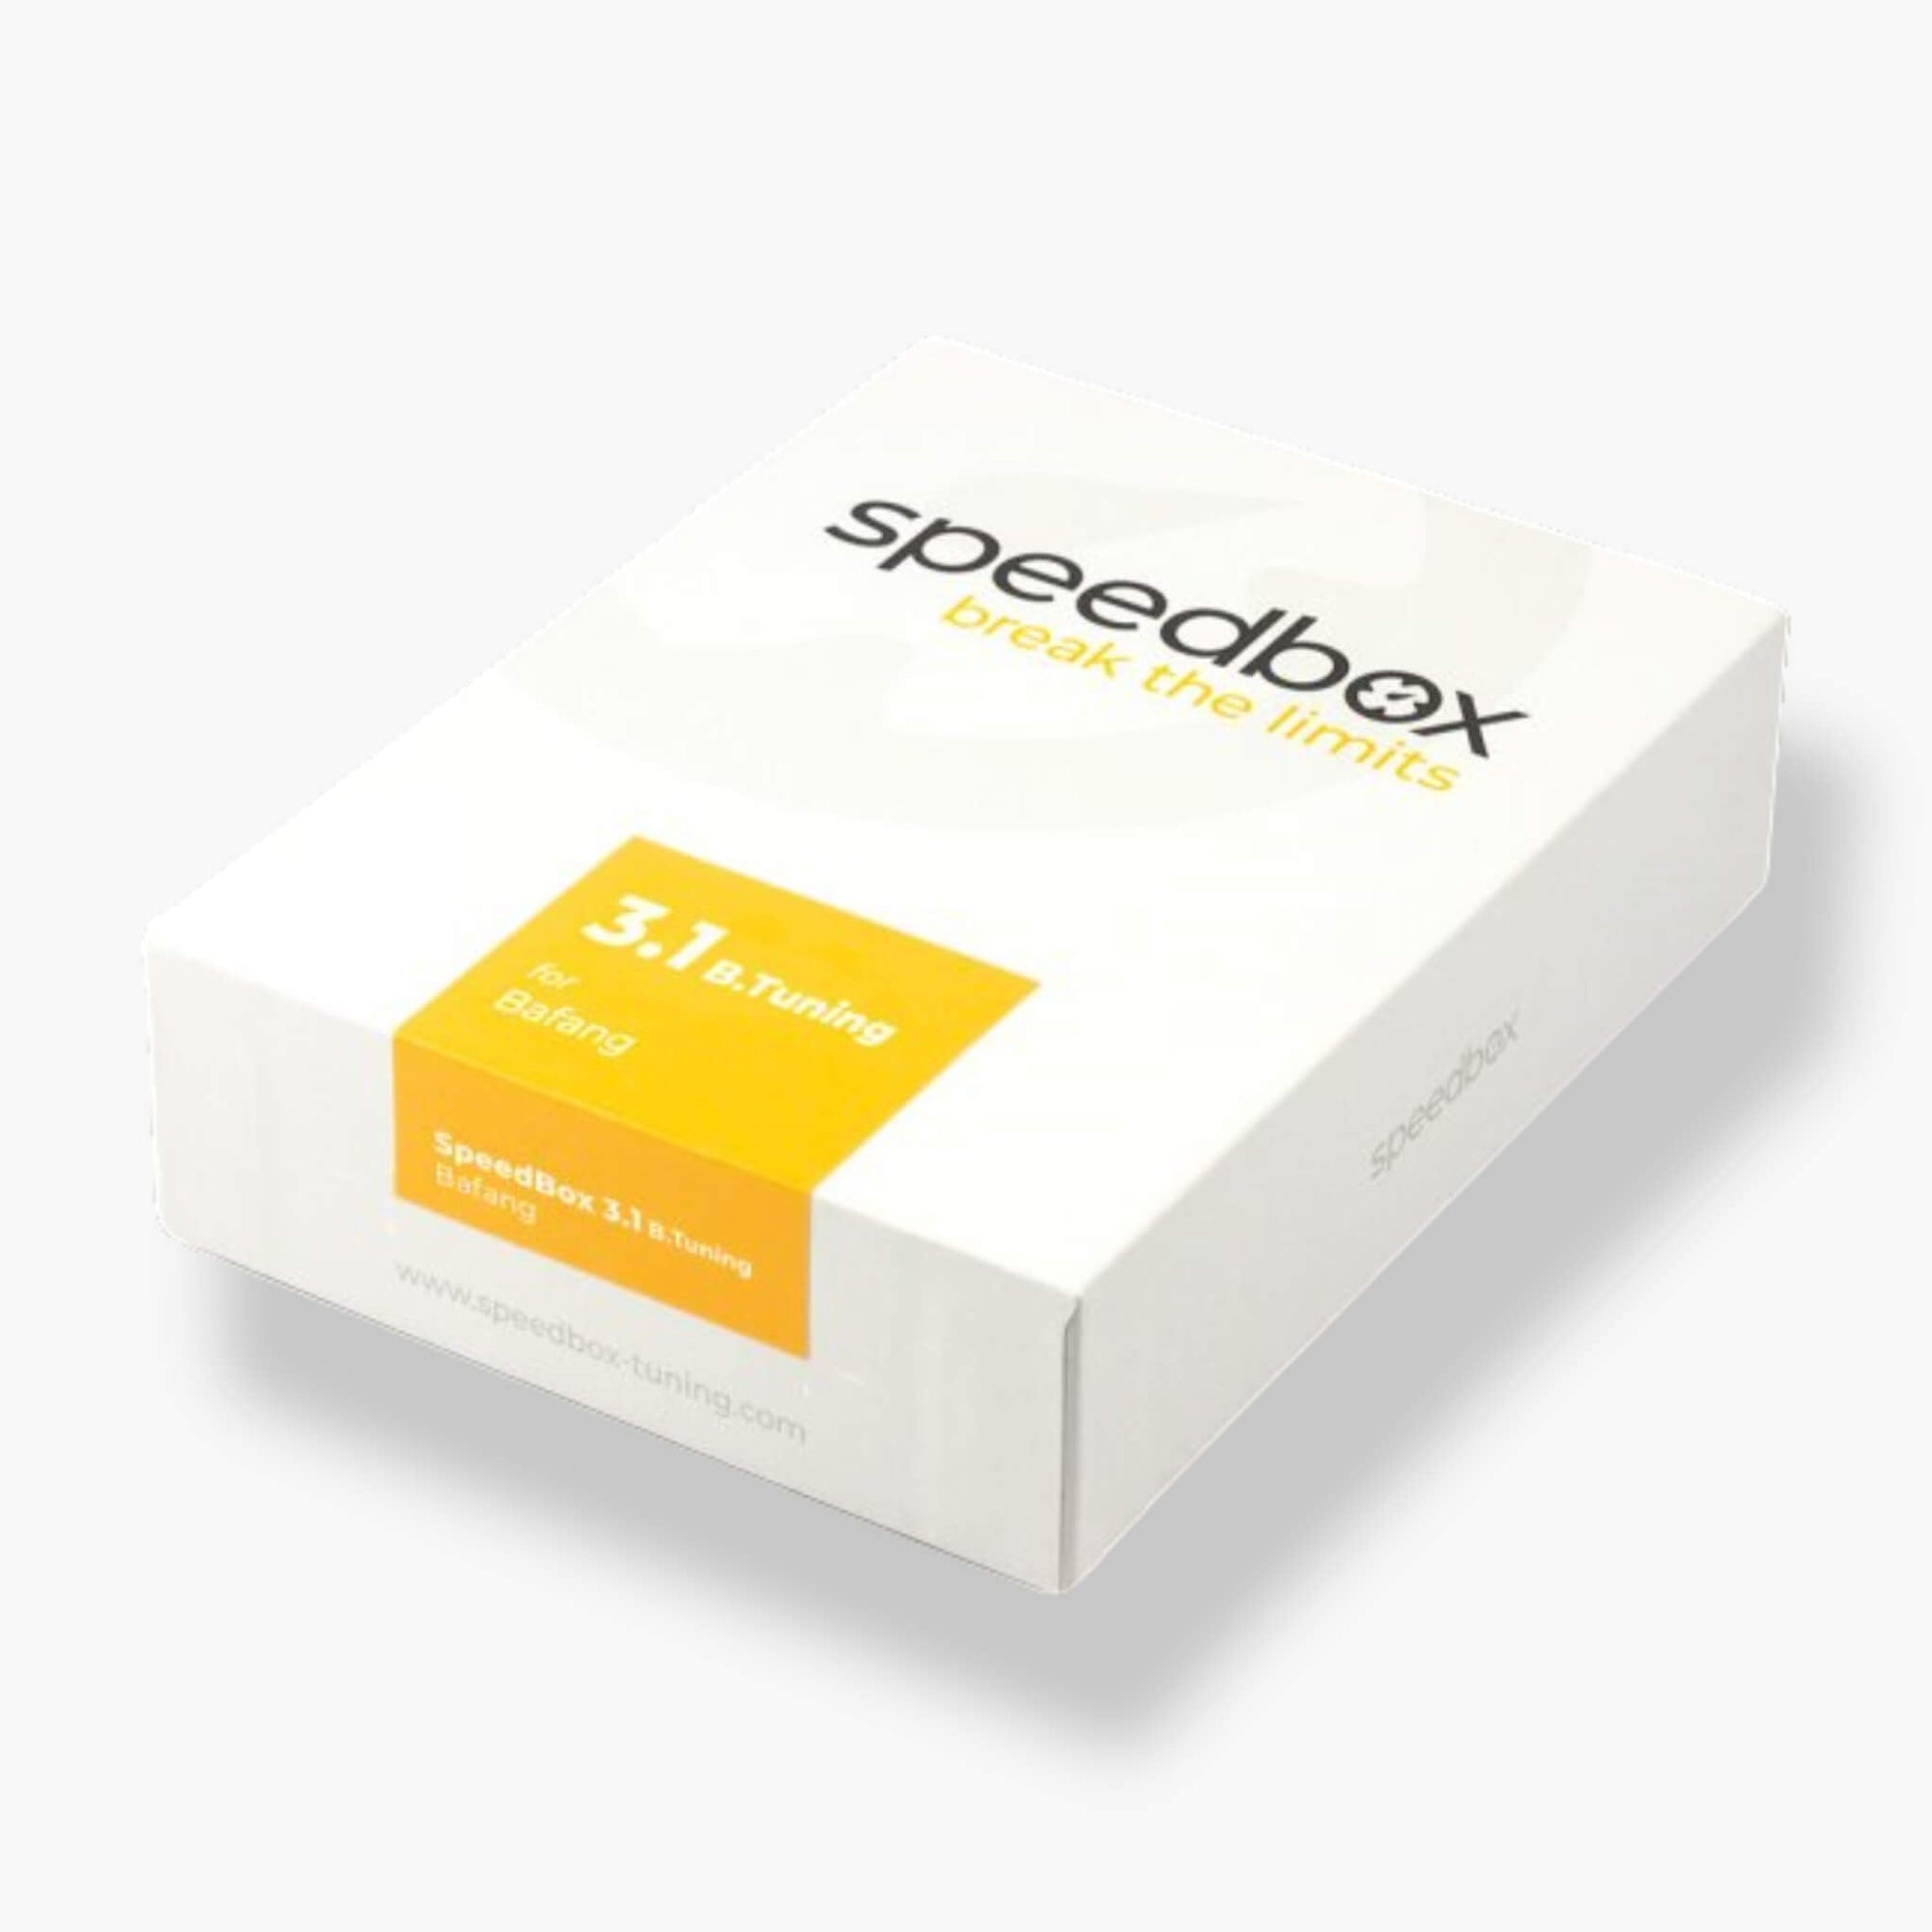 SpeedBox 3.1 B.Tuning for Bafang (4 pin kontakt) - ELSYKKEL-TRIM med App! - ebiketech